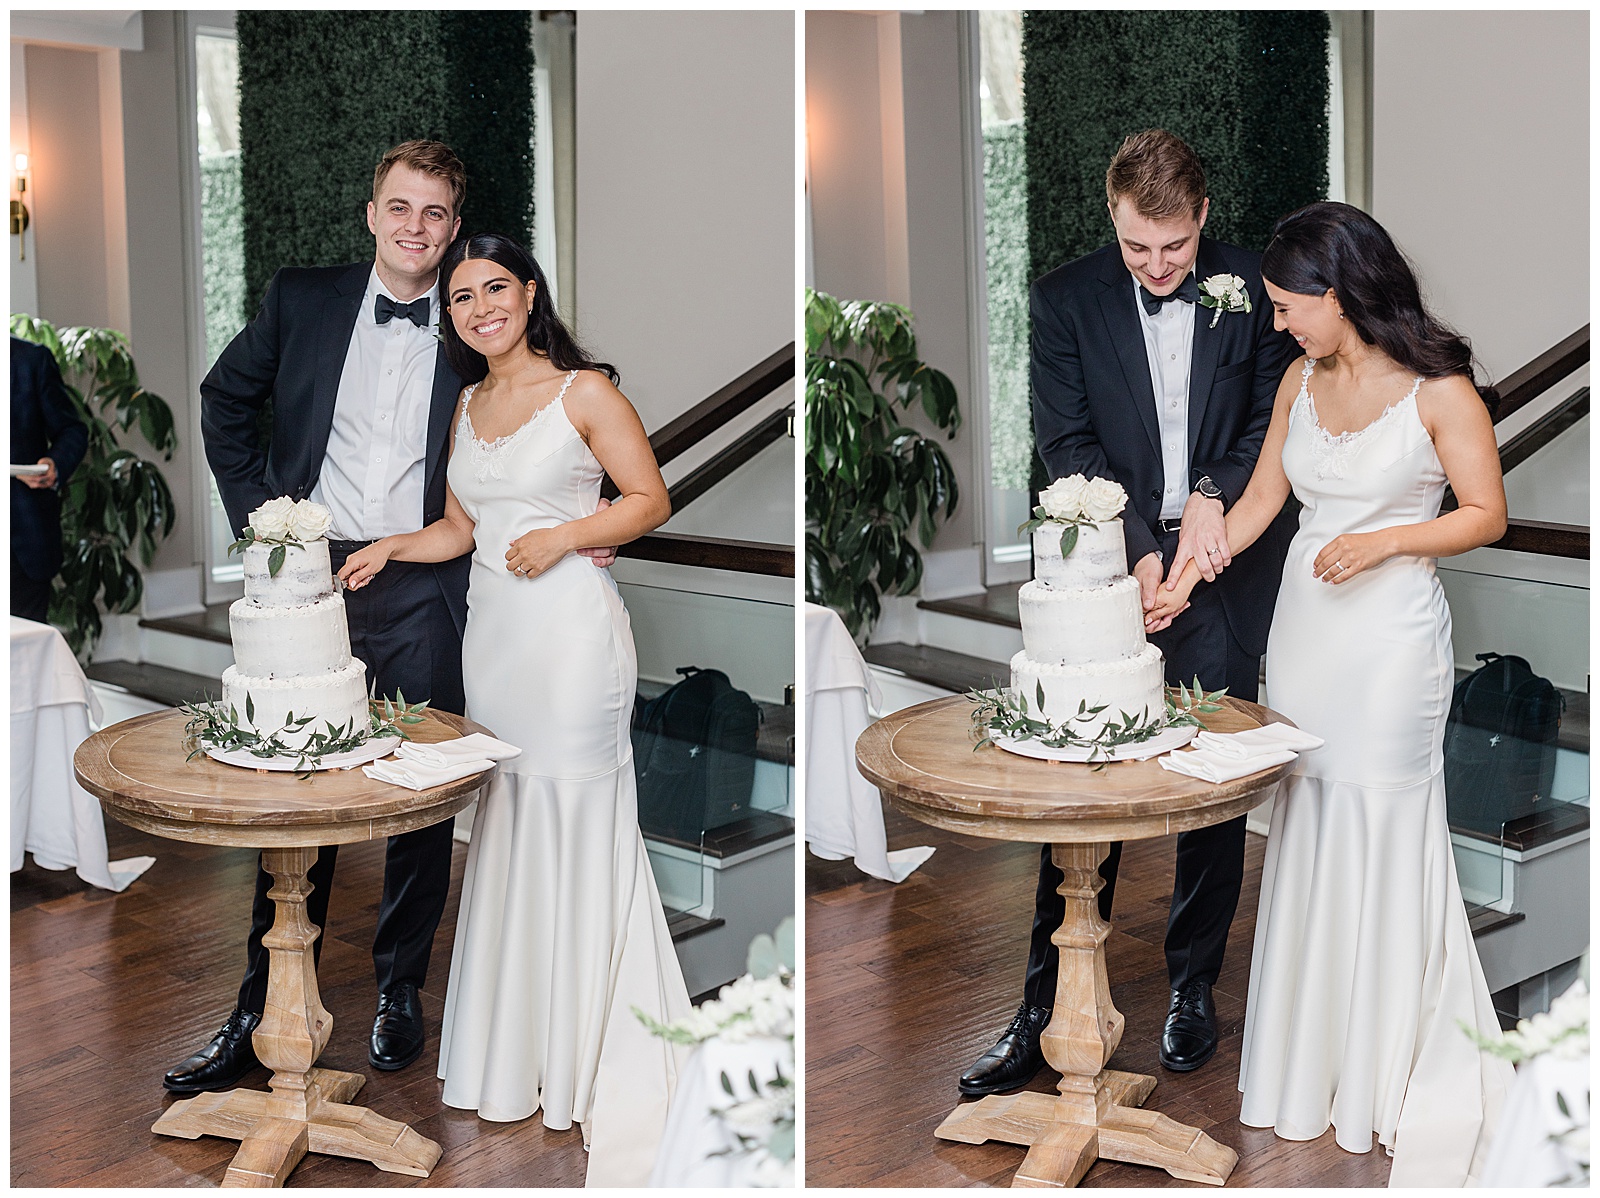 bride-and-groom-cutting-cake-roger-sherman-inn-new-canaan-connecticut.jpg